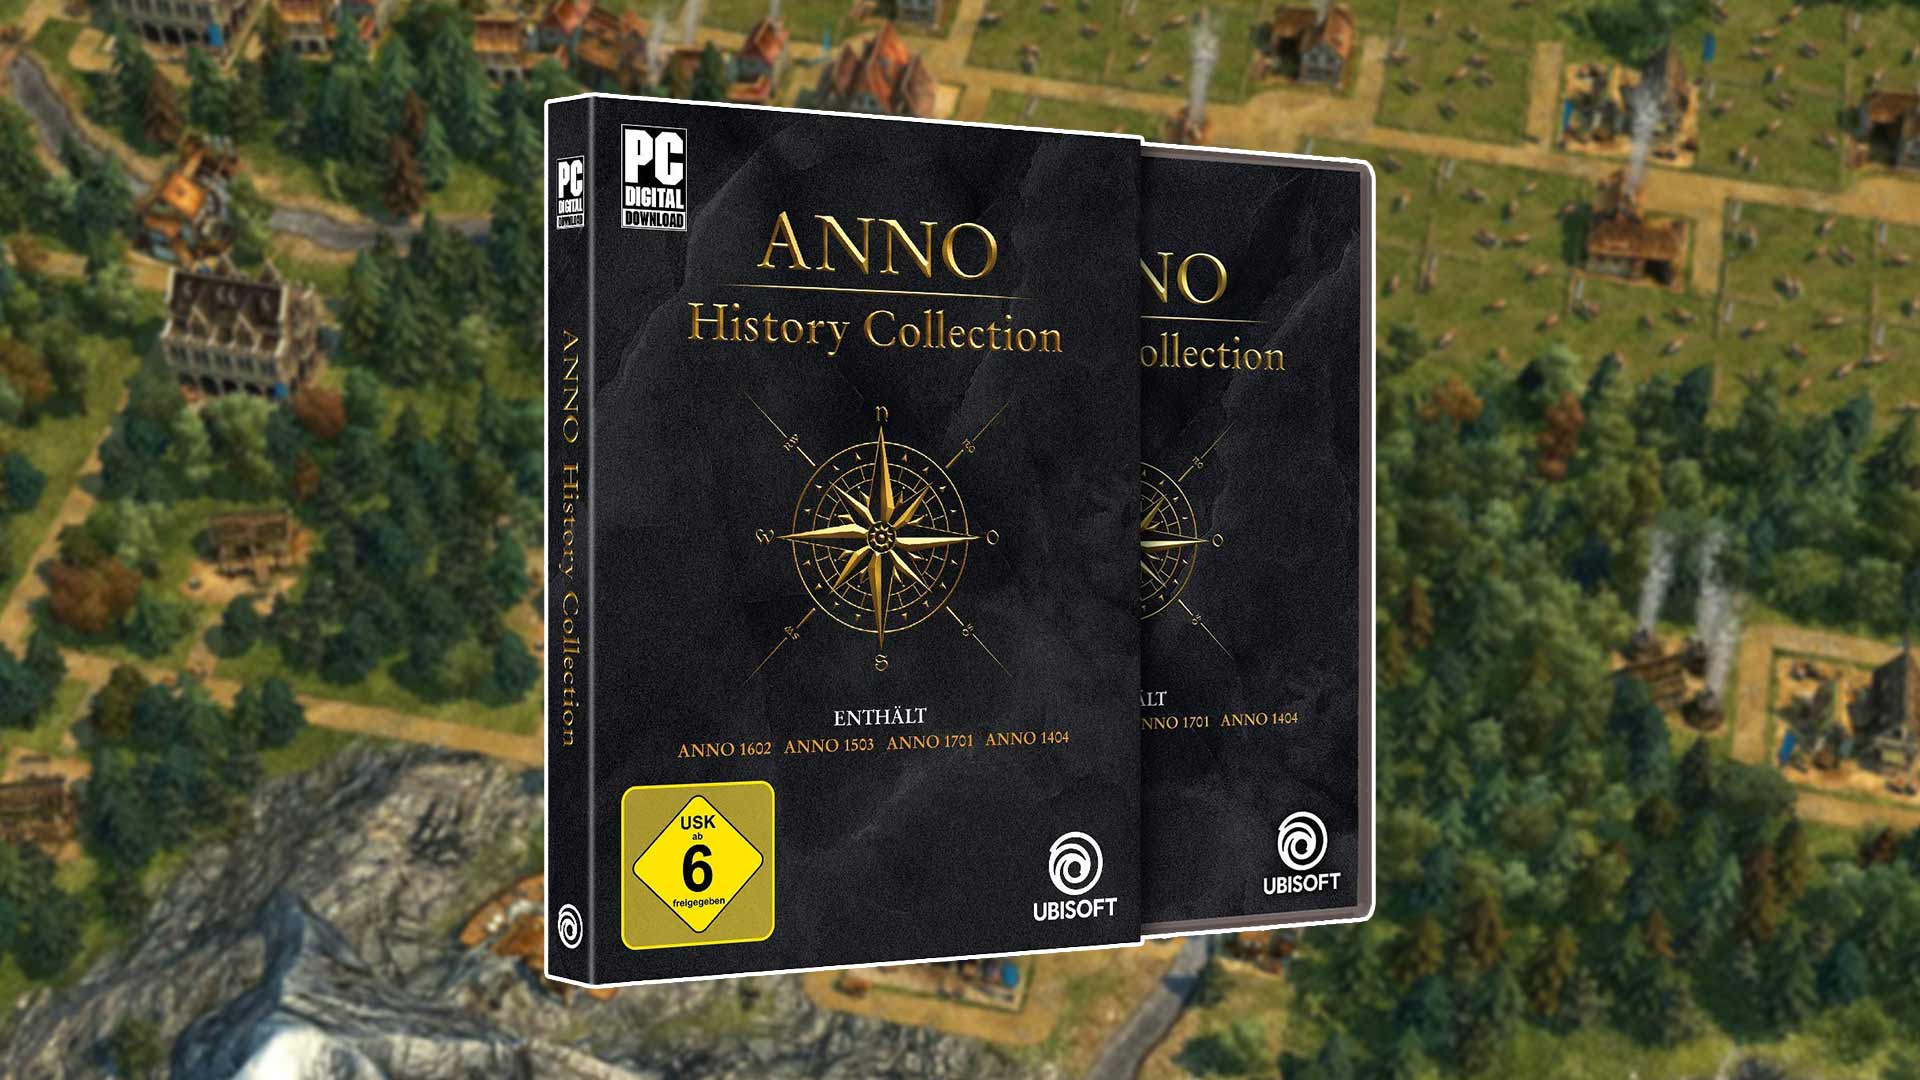 jetzt History Collection Amazon 15 Rabatt Euro mit Anno Angebot: